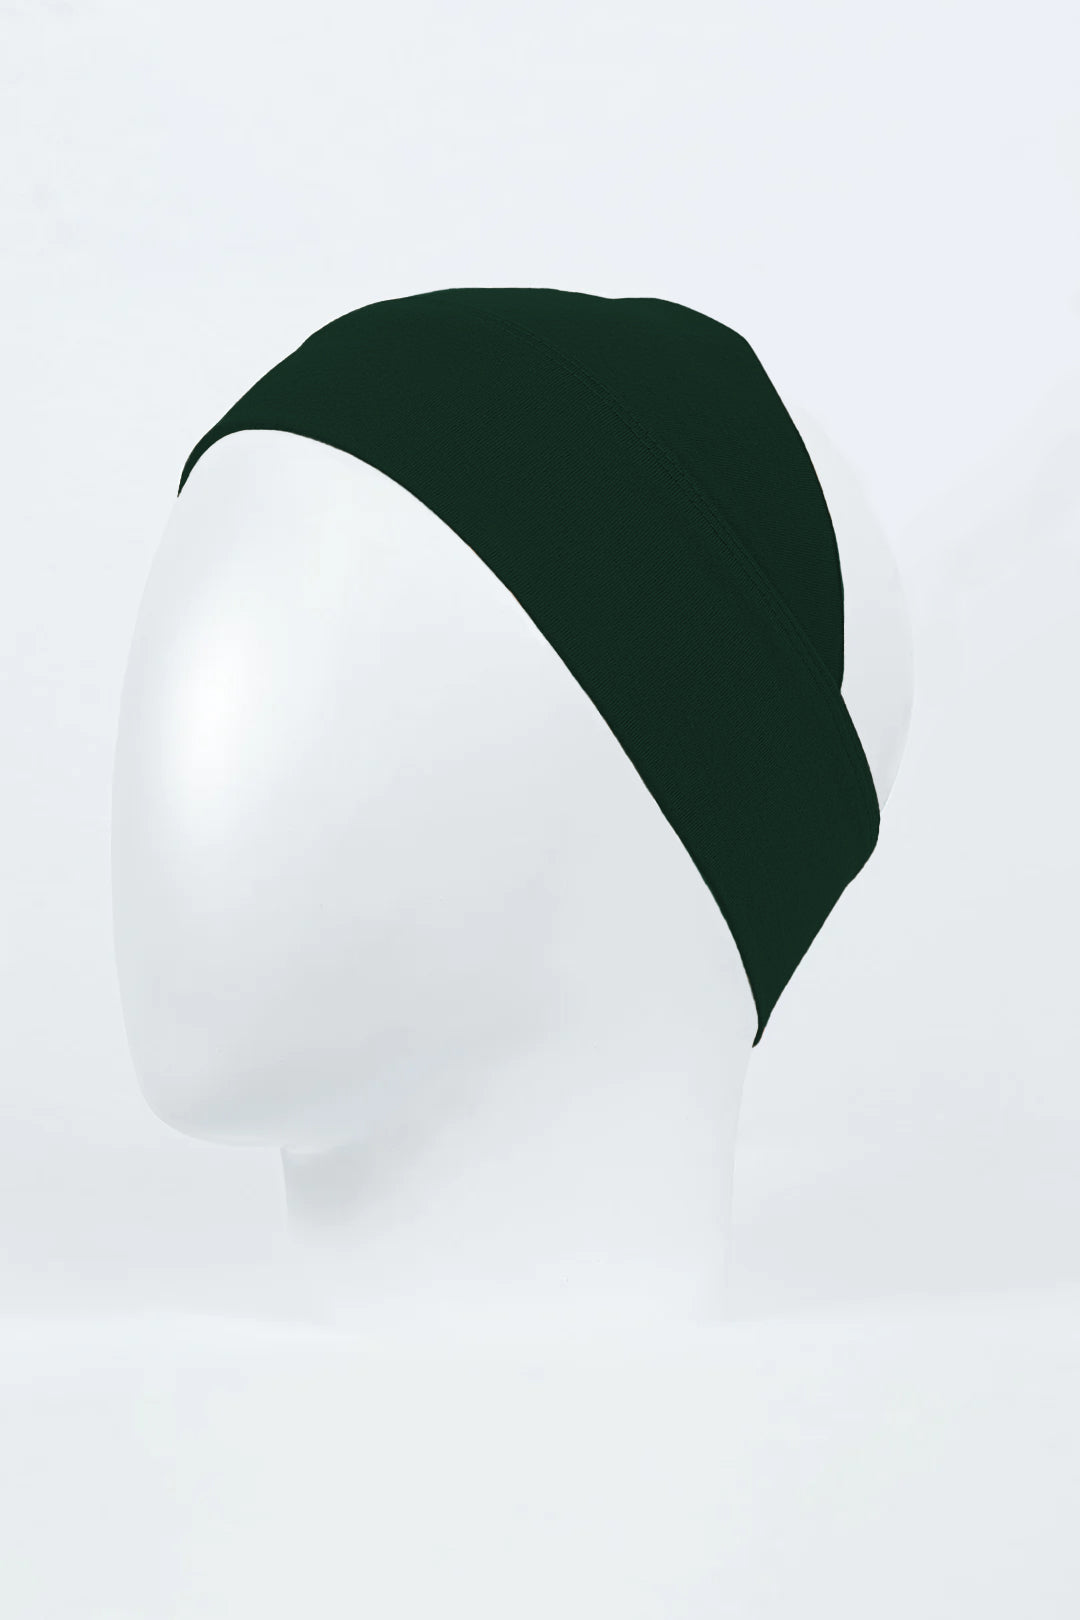 emerald hijab cap for women in pakistan